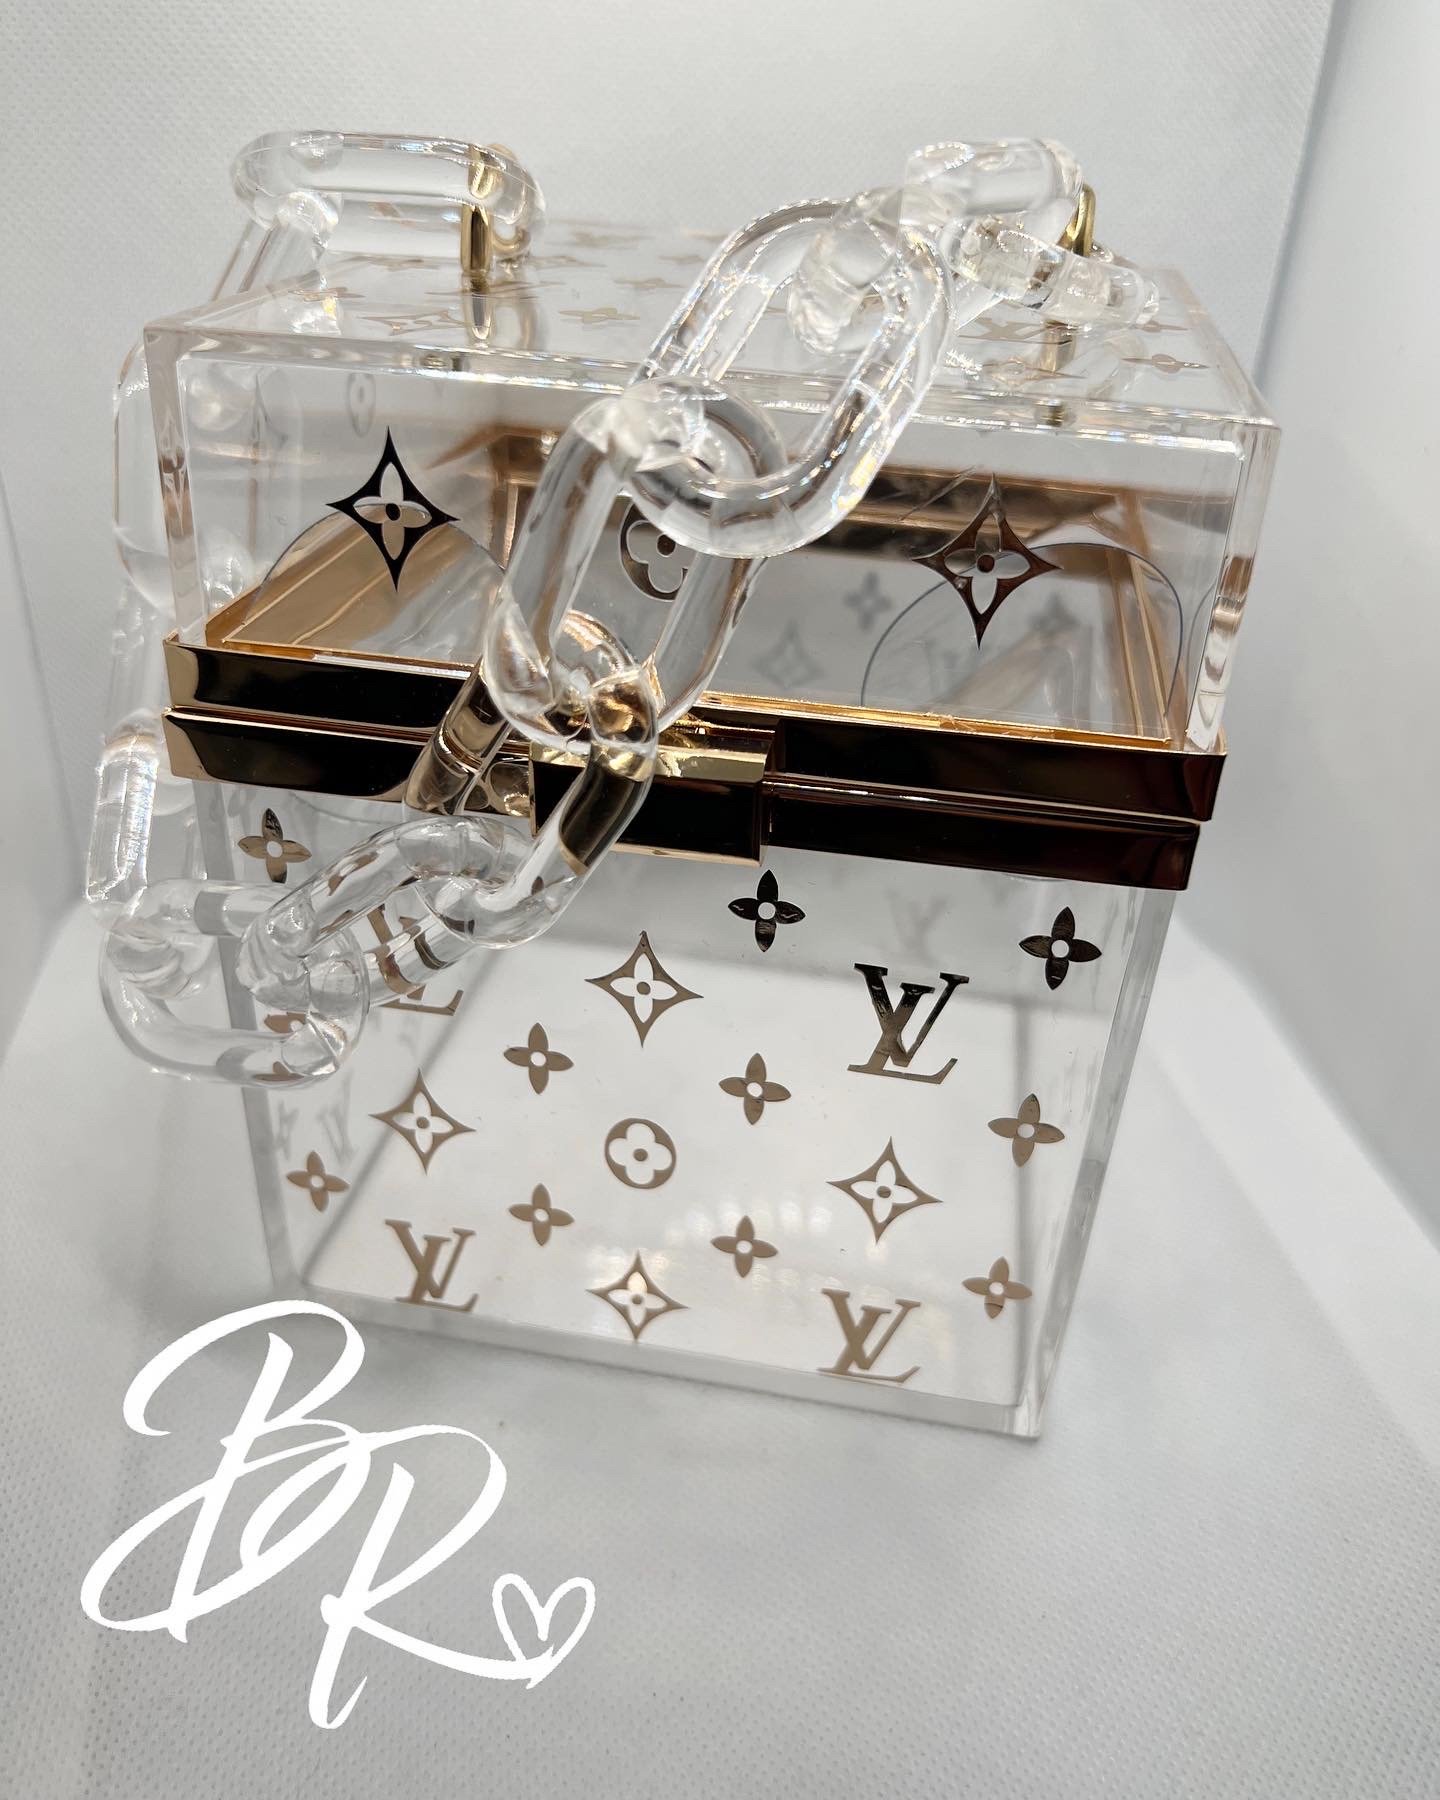 Louis Vuitton Scott Box Cube